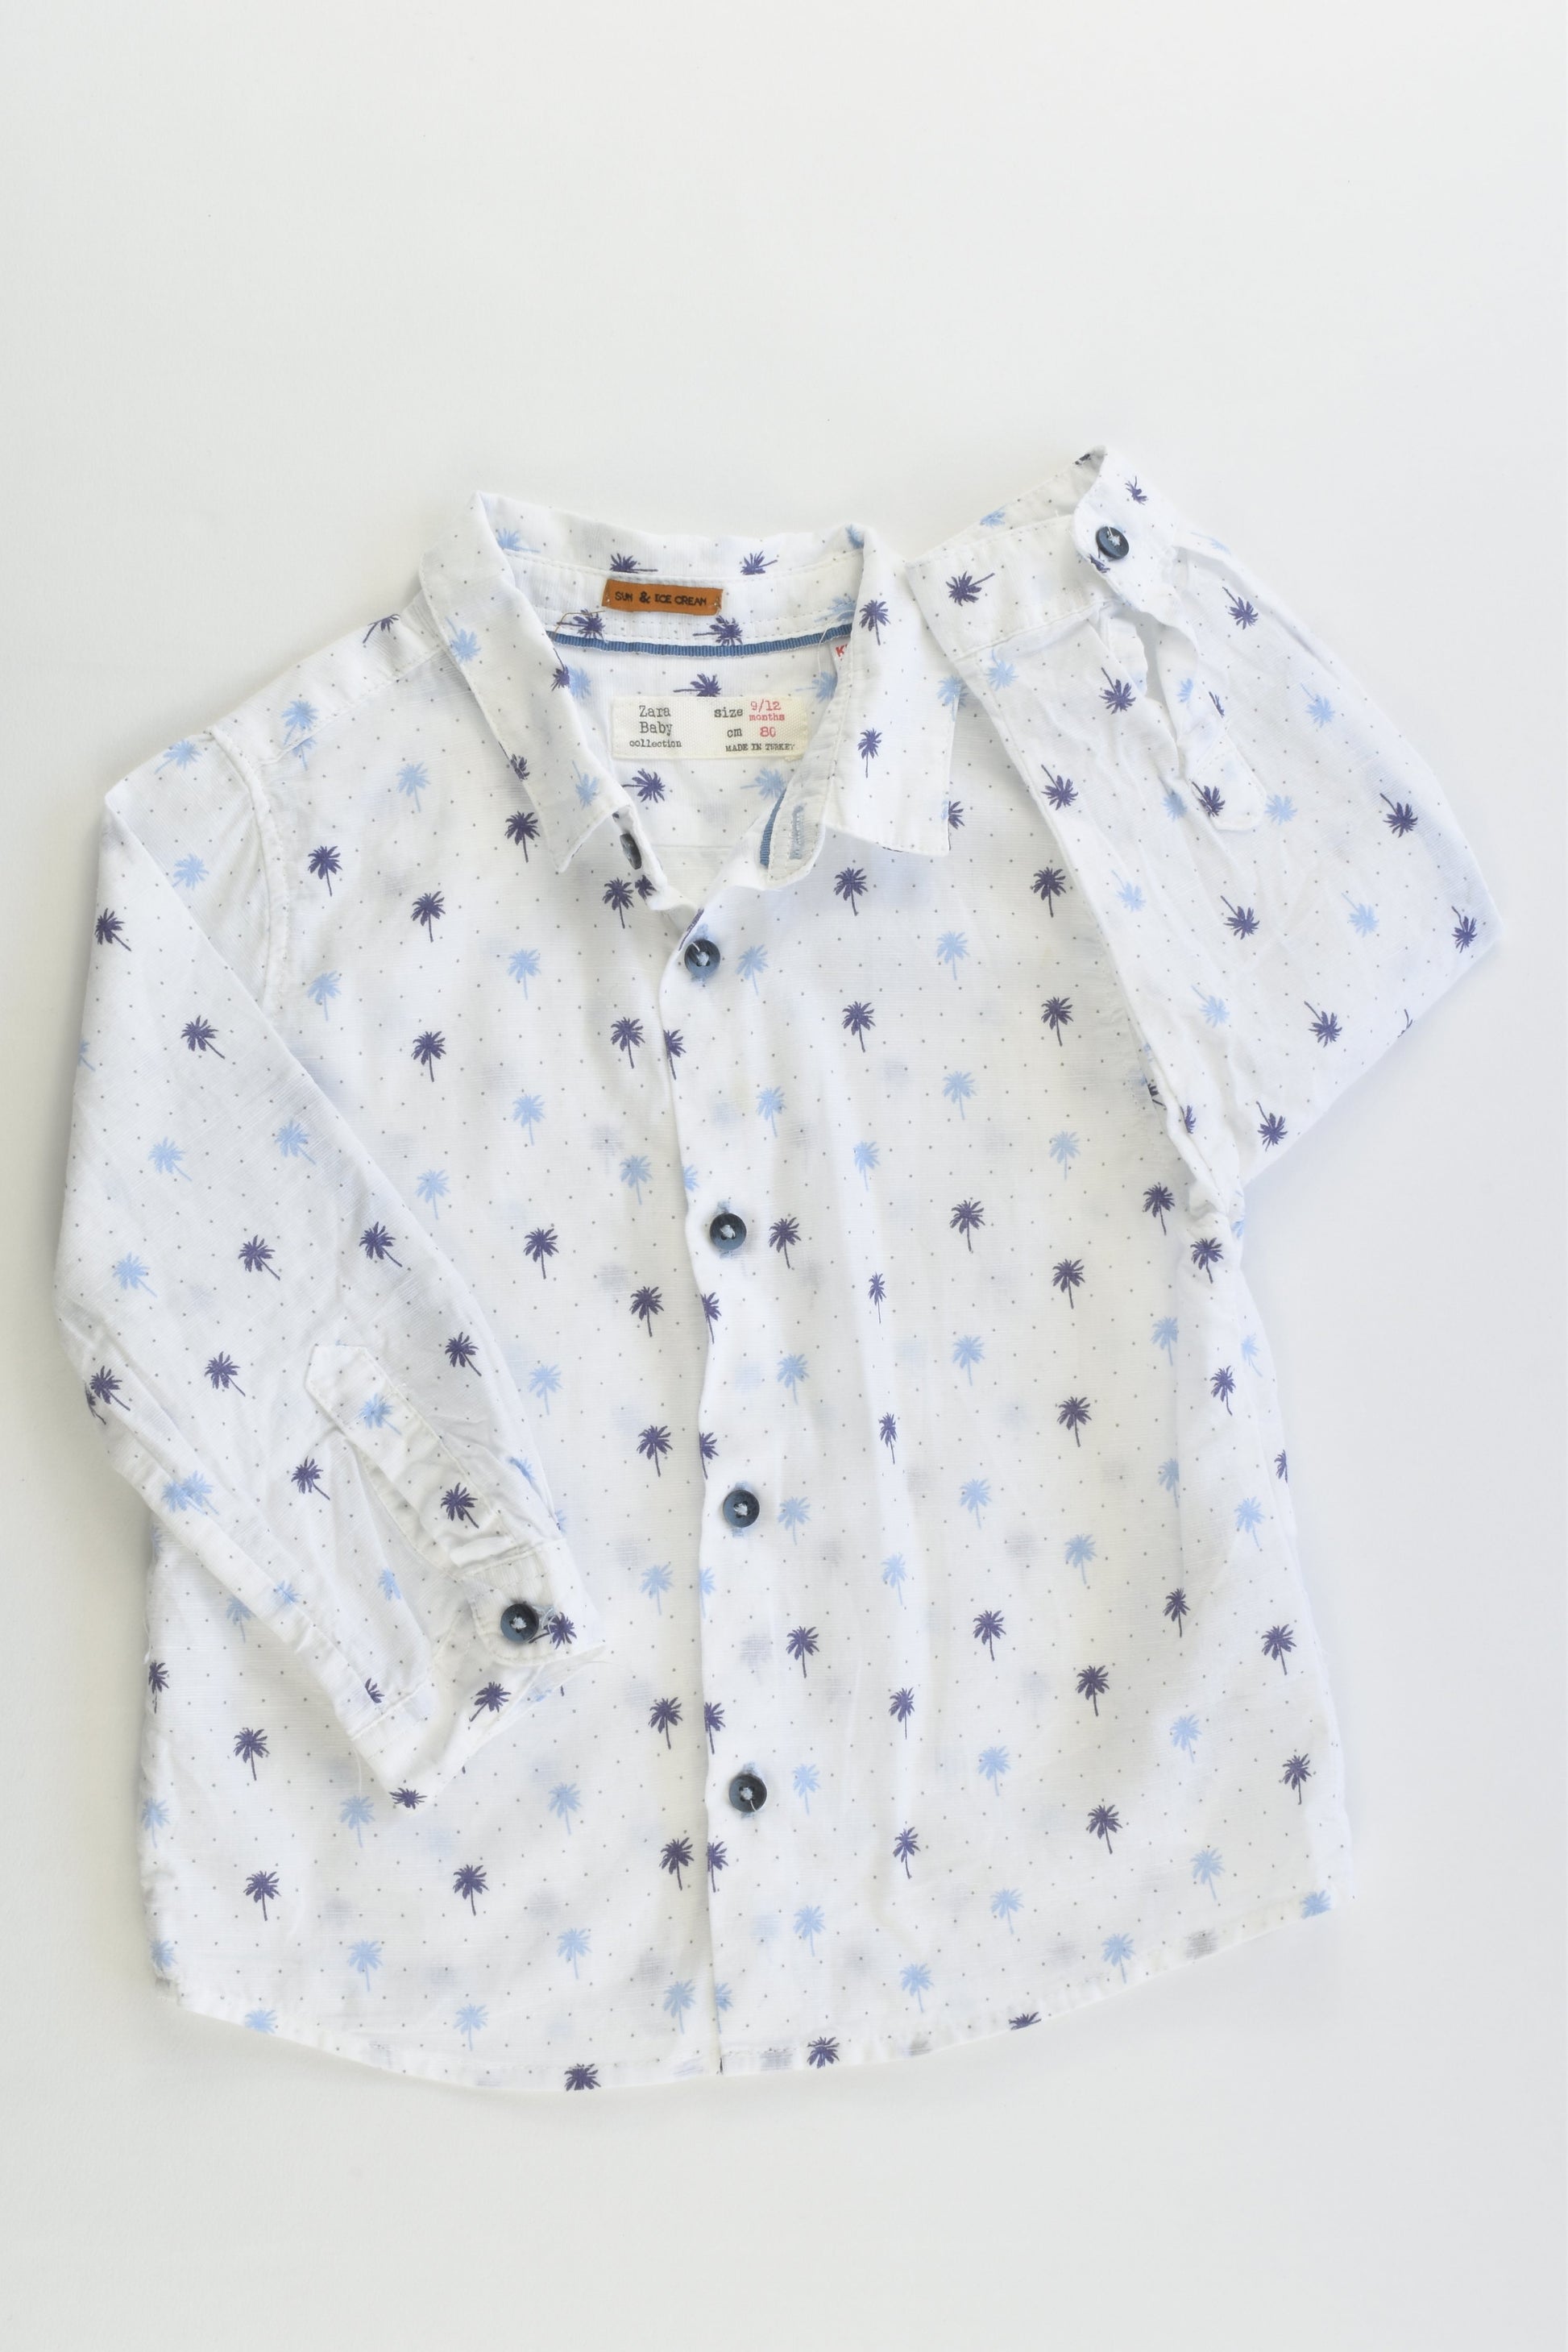 Zara Size 0 (9/12 months, 80 cm) Palm Trees Cotton/Linen Collared Shirt